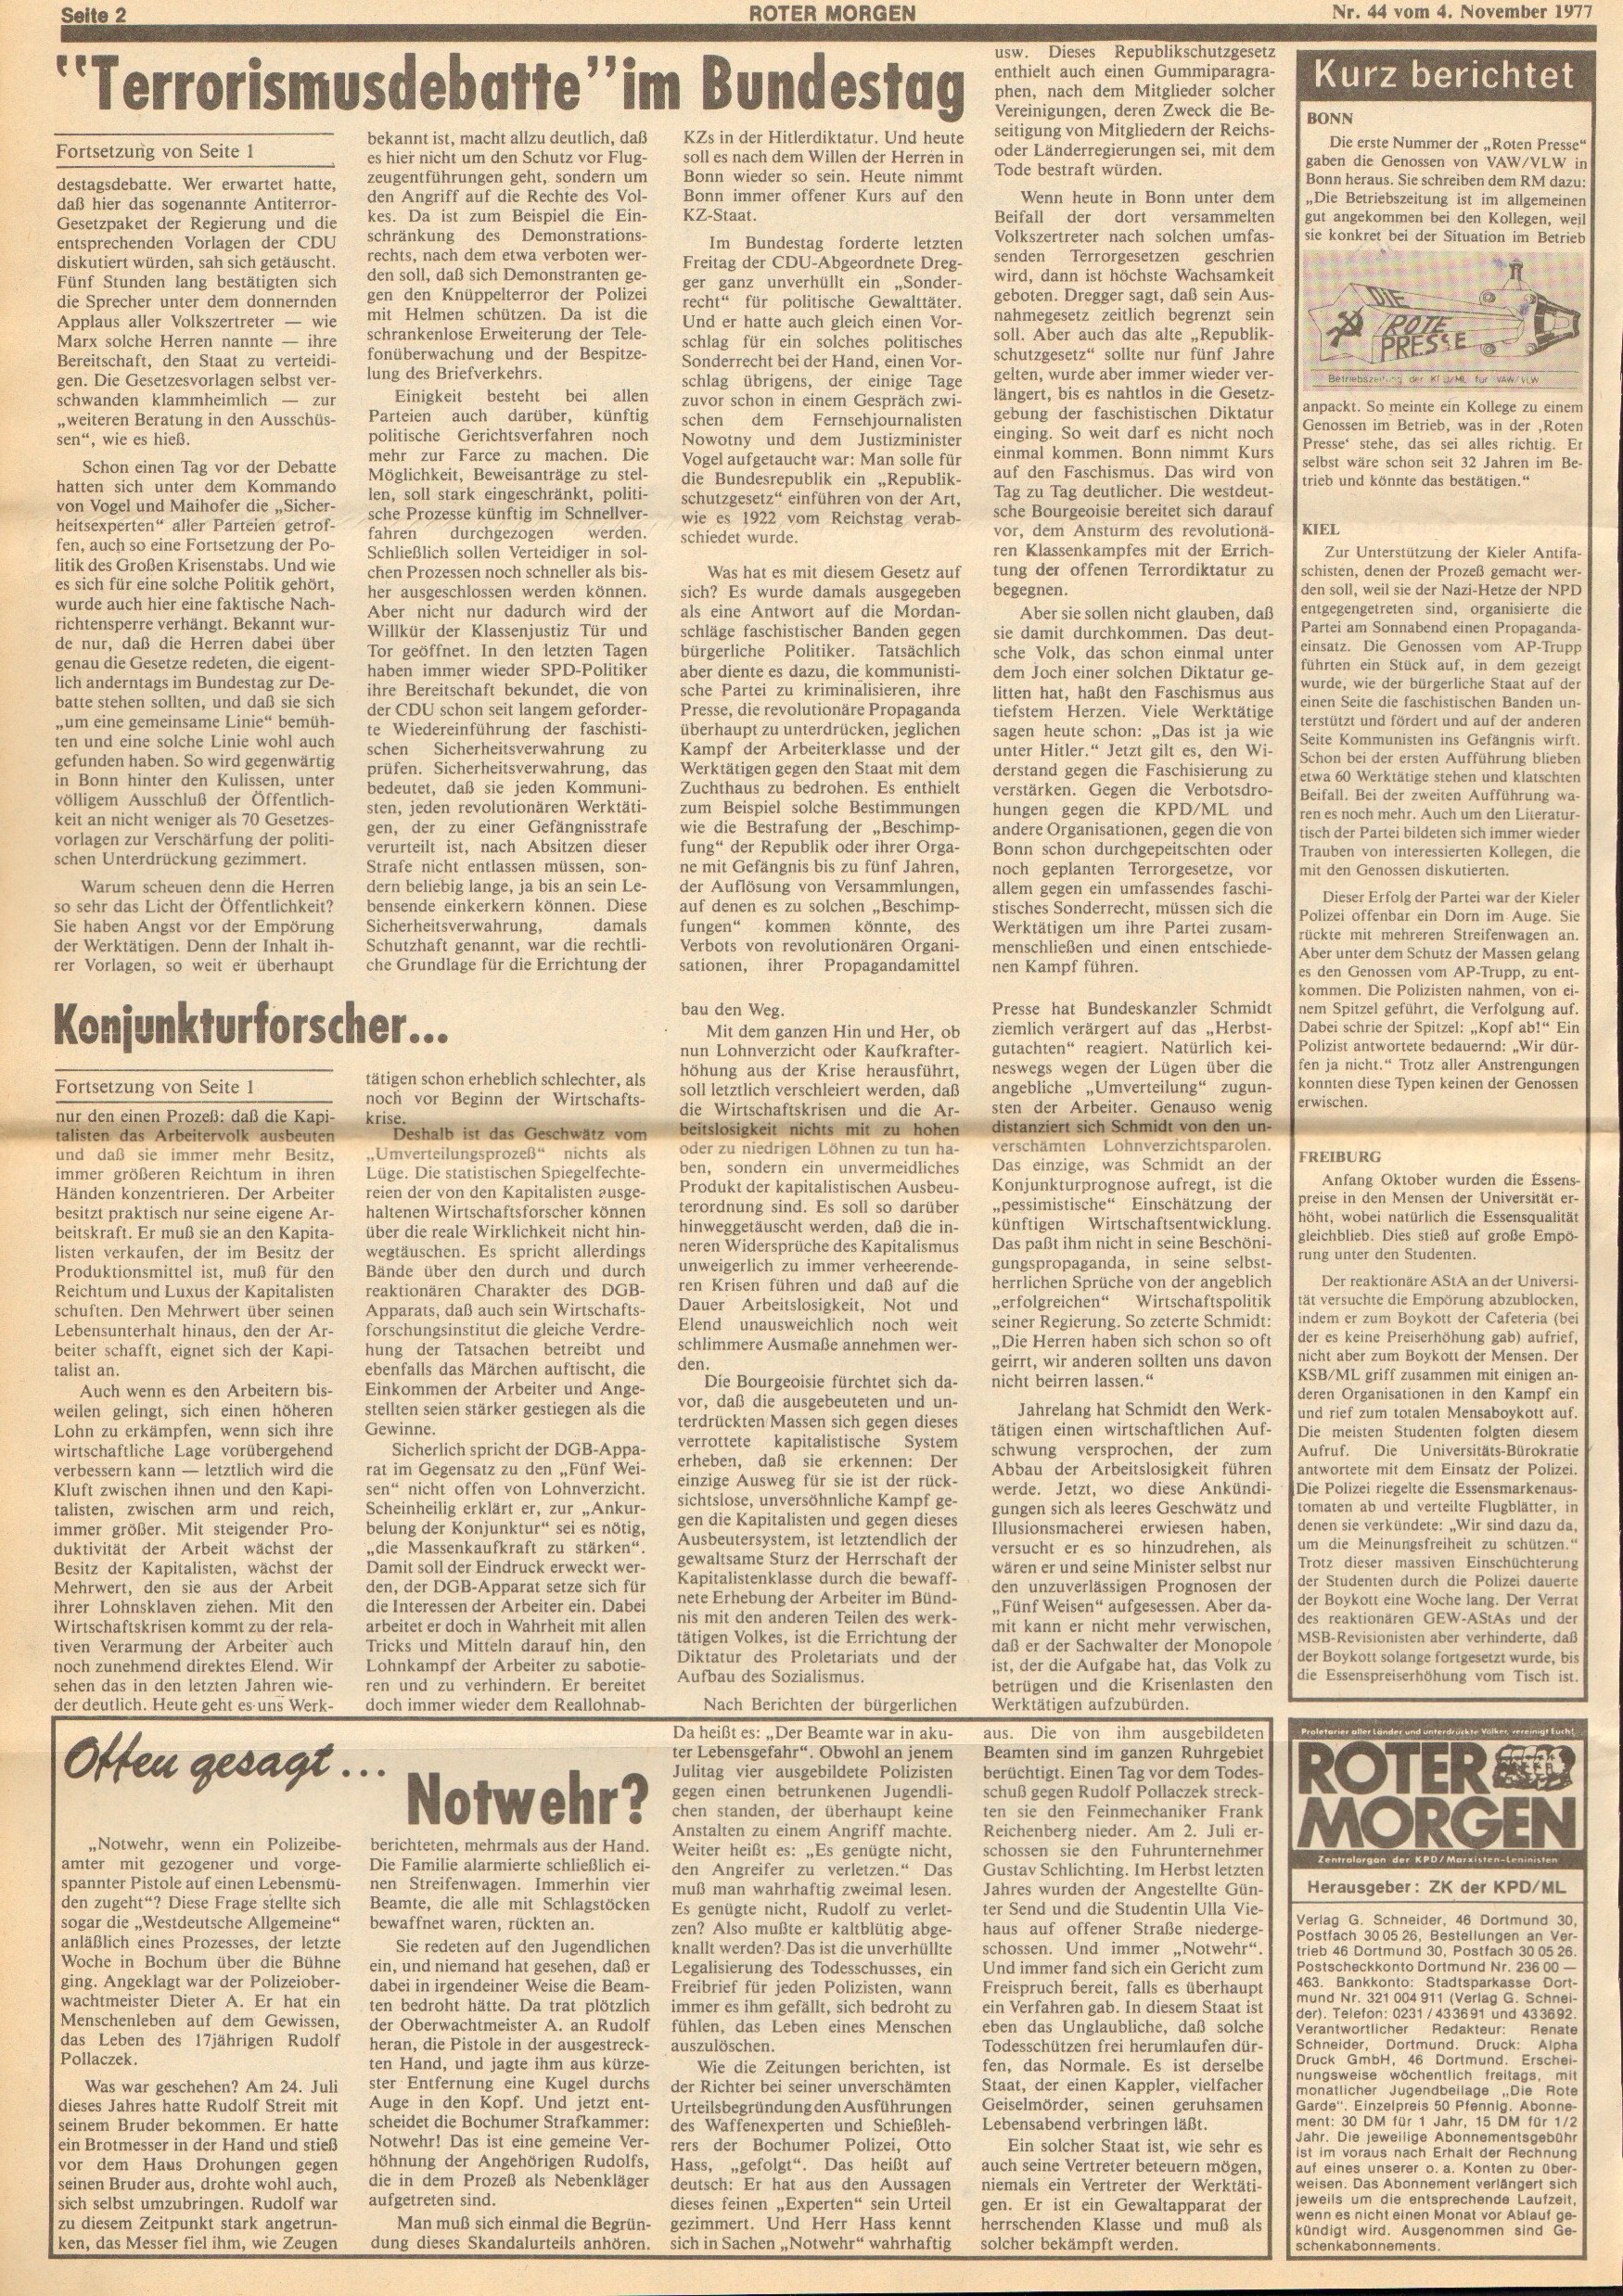 Roter Morgen, 11. Jg., 4. November 1977, Nr. 44, Seite 2